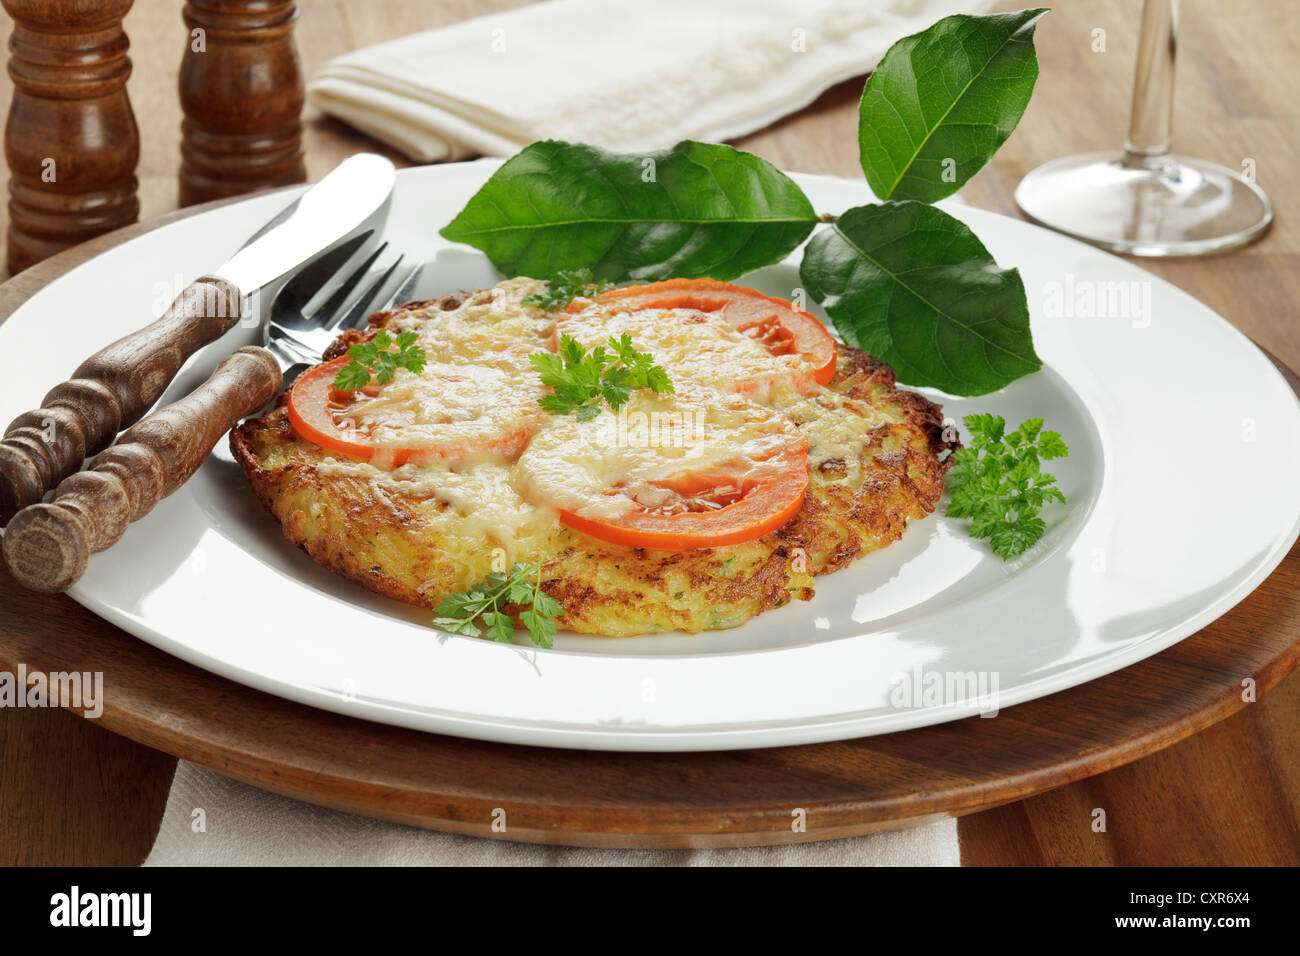 Kartoffel-Rösti mit Tomaten und Käse überbacken Stockfotografie - Alamy